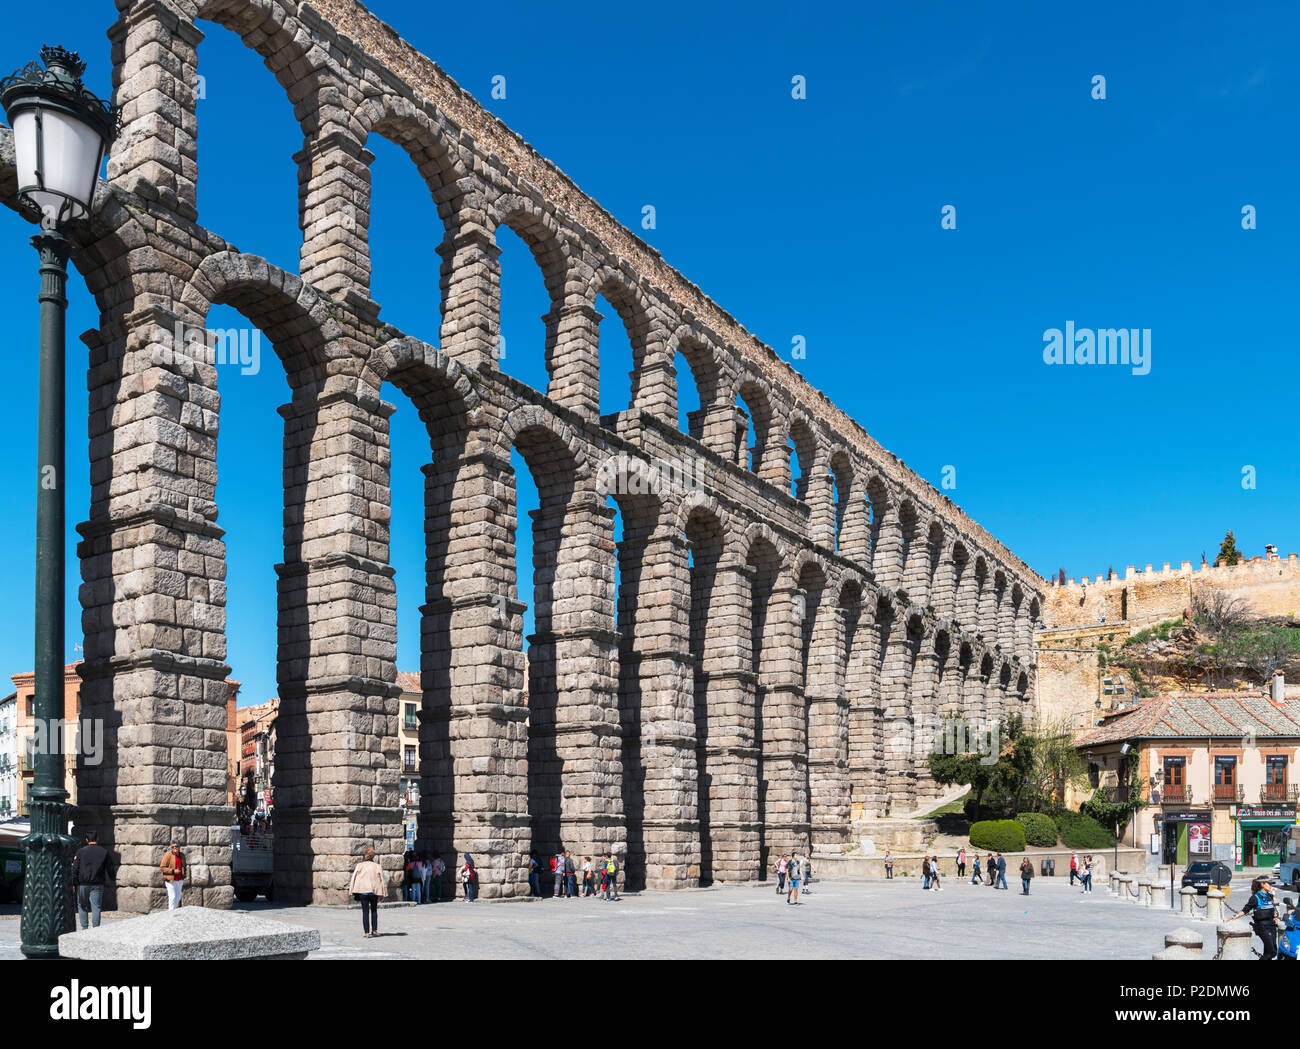 Segovia aqueduct. The 1st centry Roman aqueduct from the Plaza Artilleria, Segovia, Spain Stock Photo